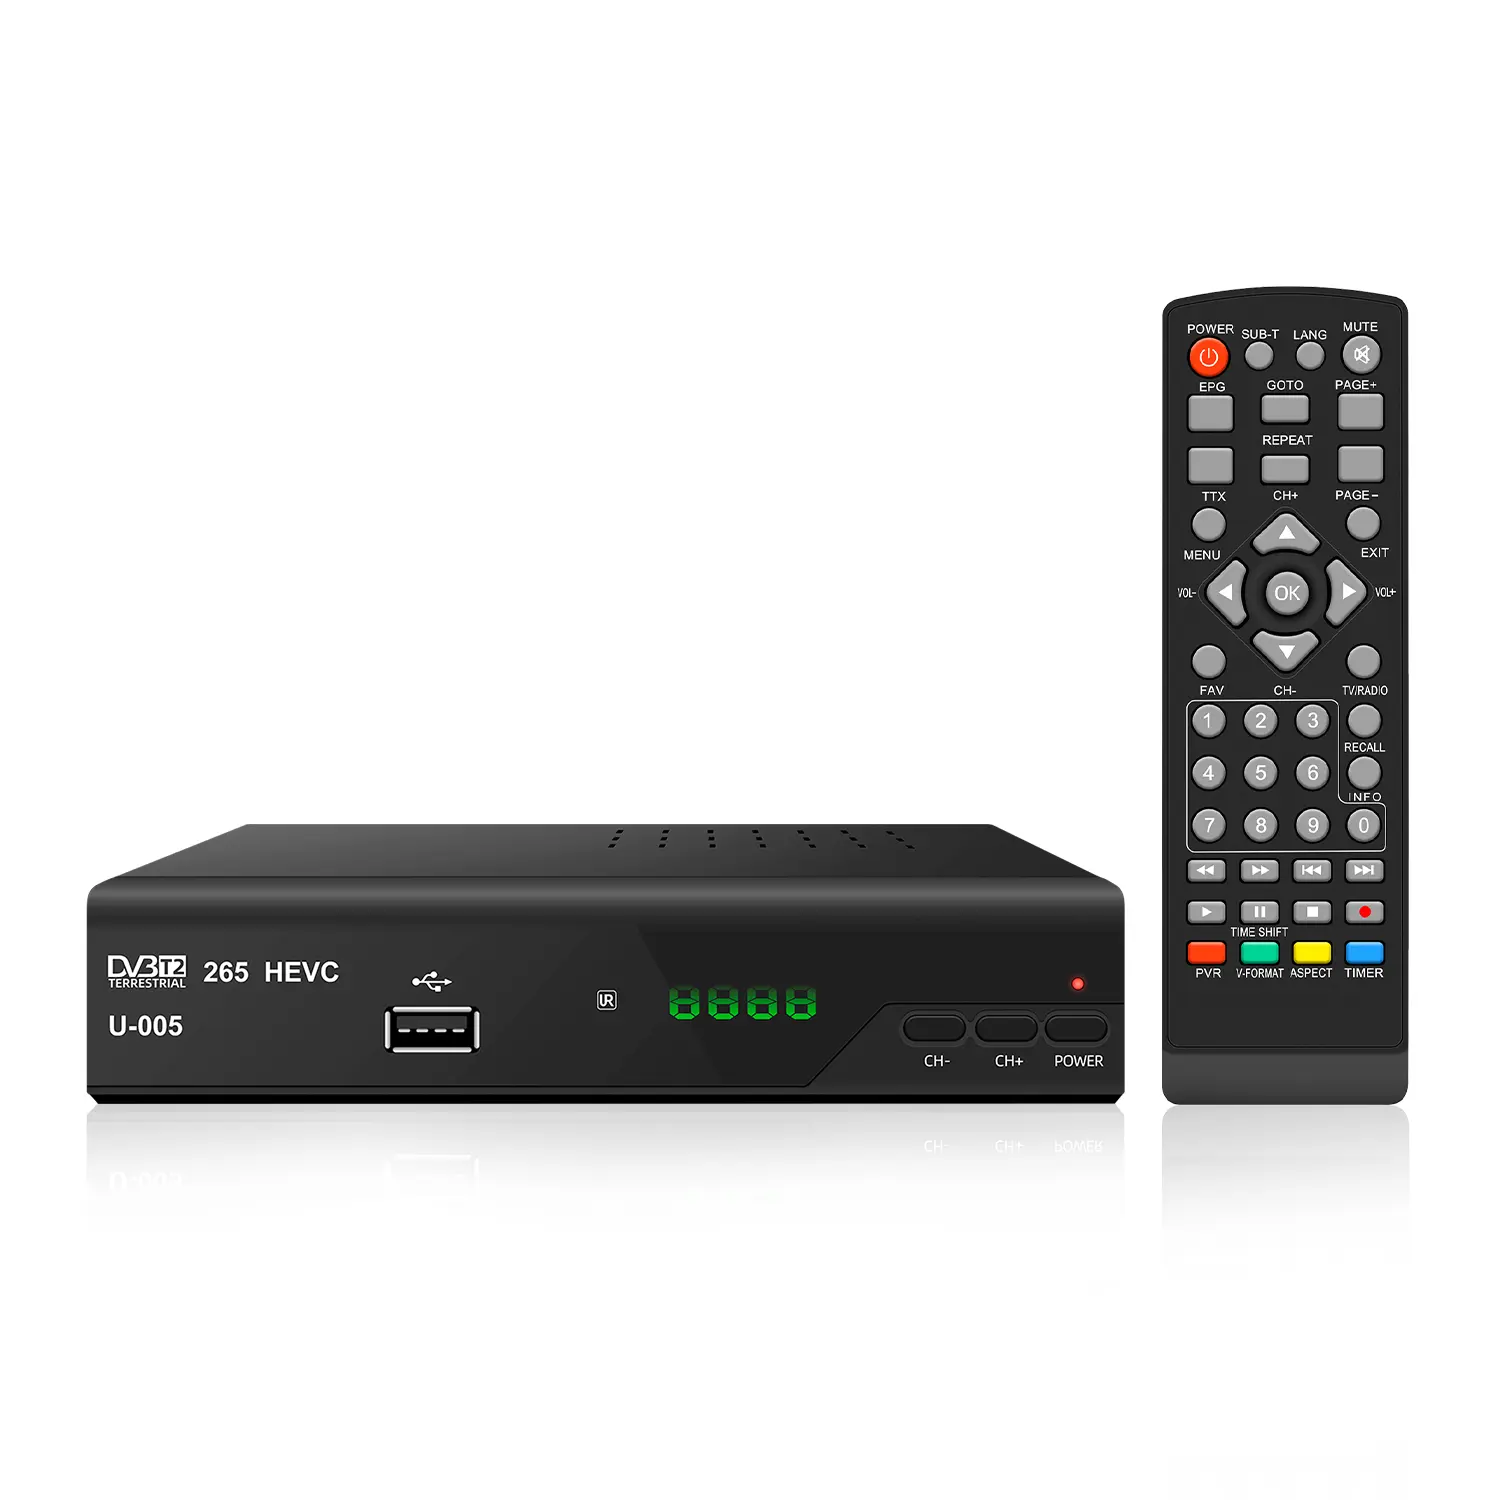 DVB T2 penerima tv Digital, penerima tv Digital H265 10Bit AC4 DVB T2 set top Box antena dekoder hd penuh